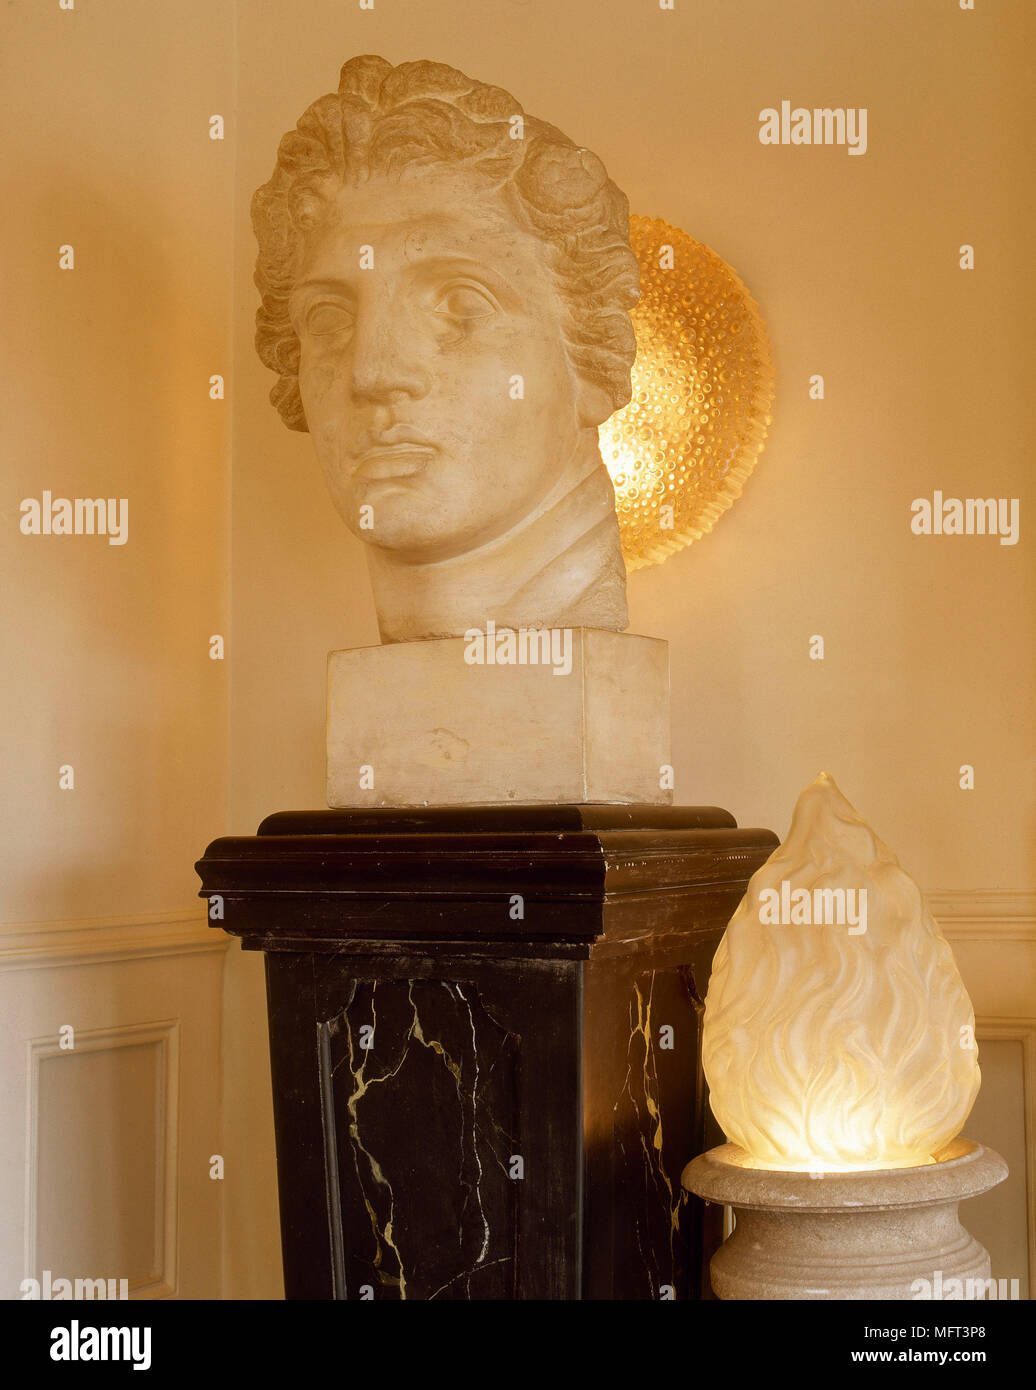 Bust statue on plinth  interiors detail lighting Stock Photo